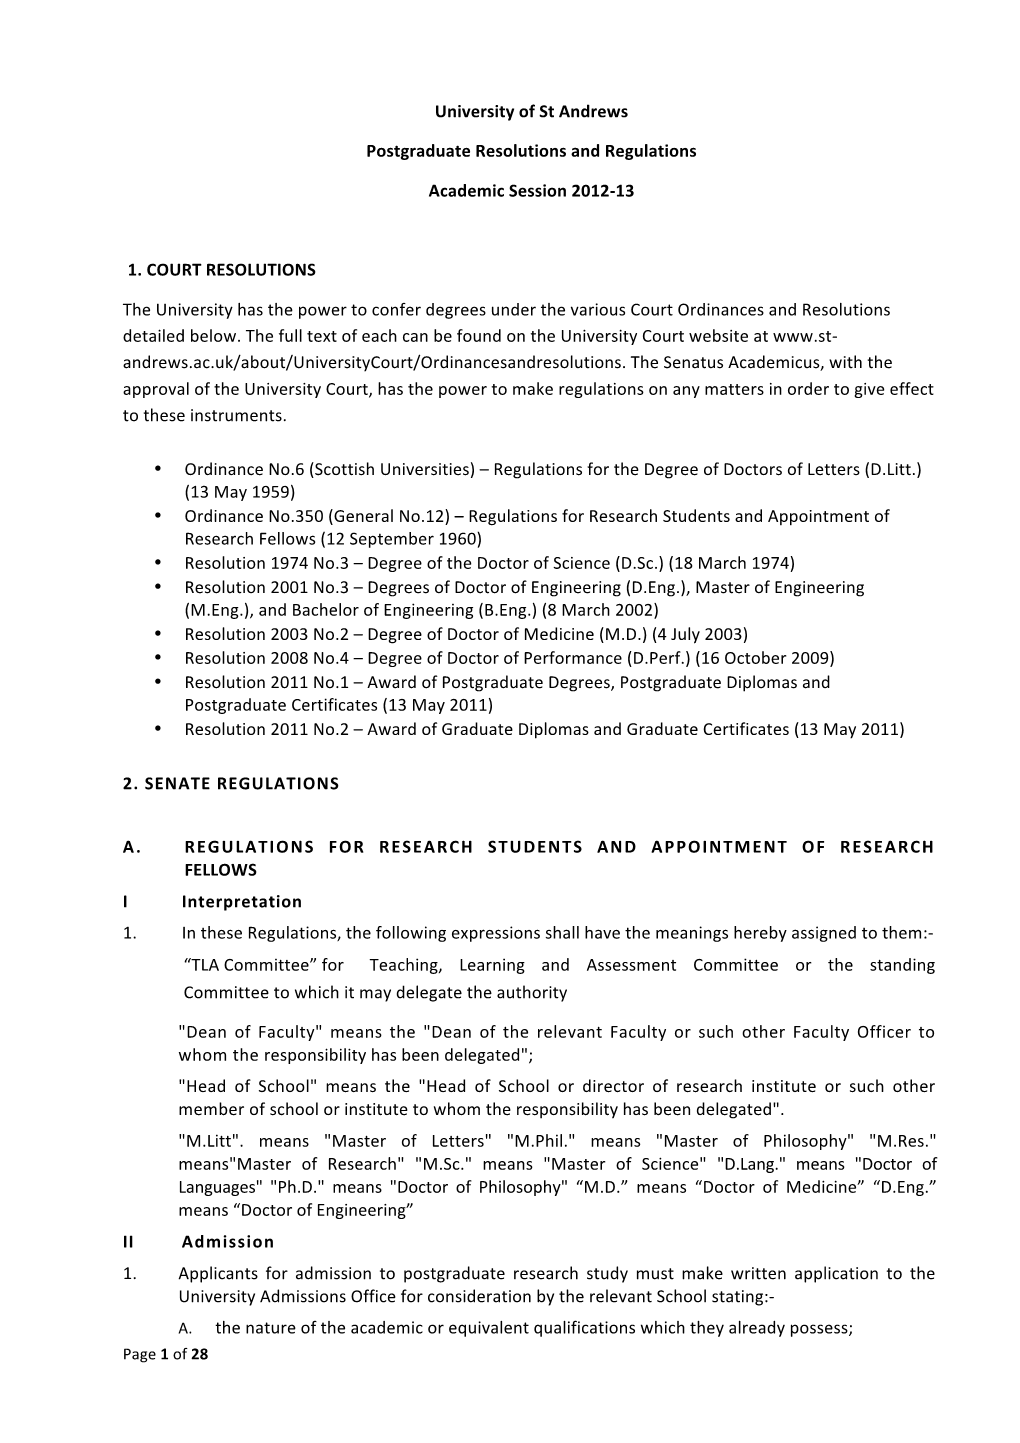 University of St Andrews Postgraduate Resolutions and Regulations